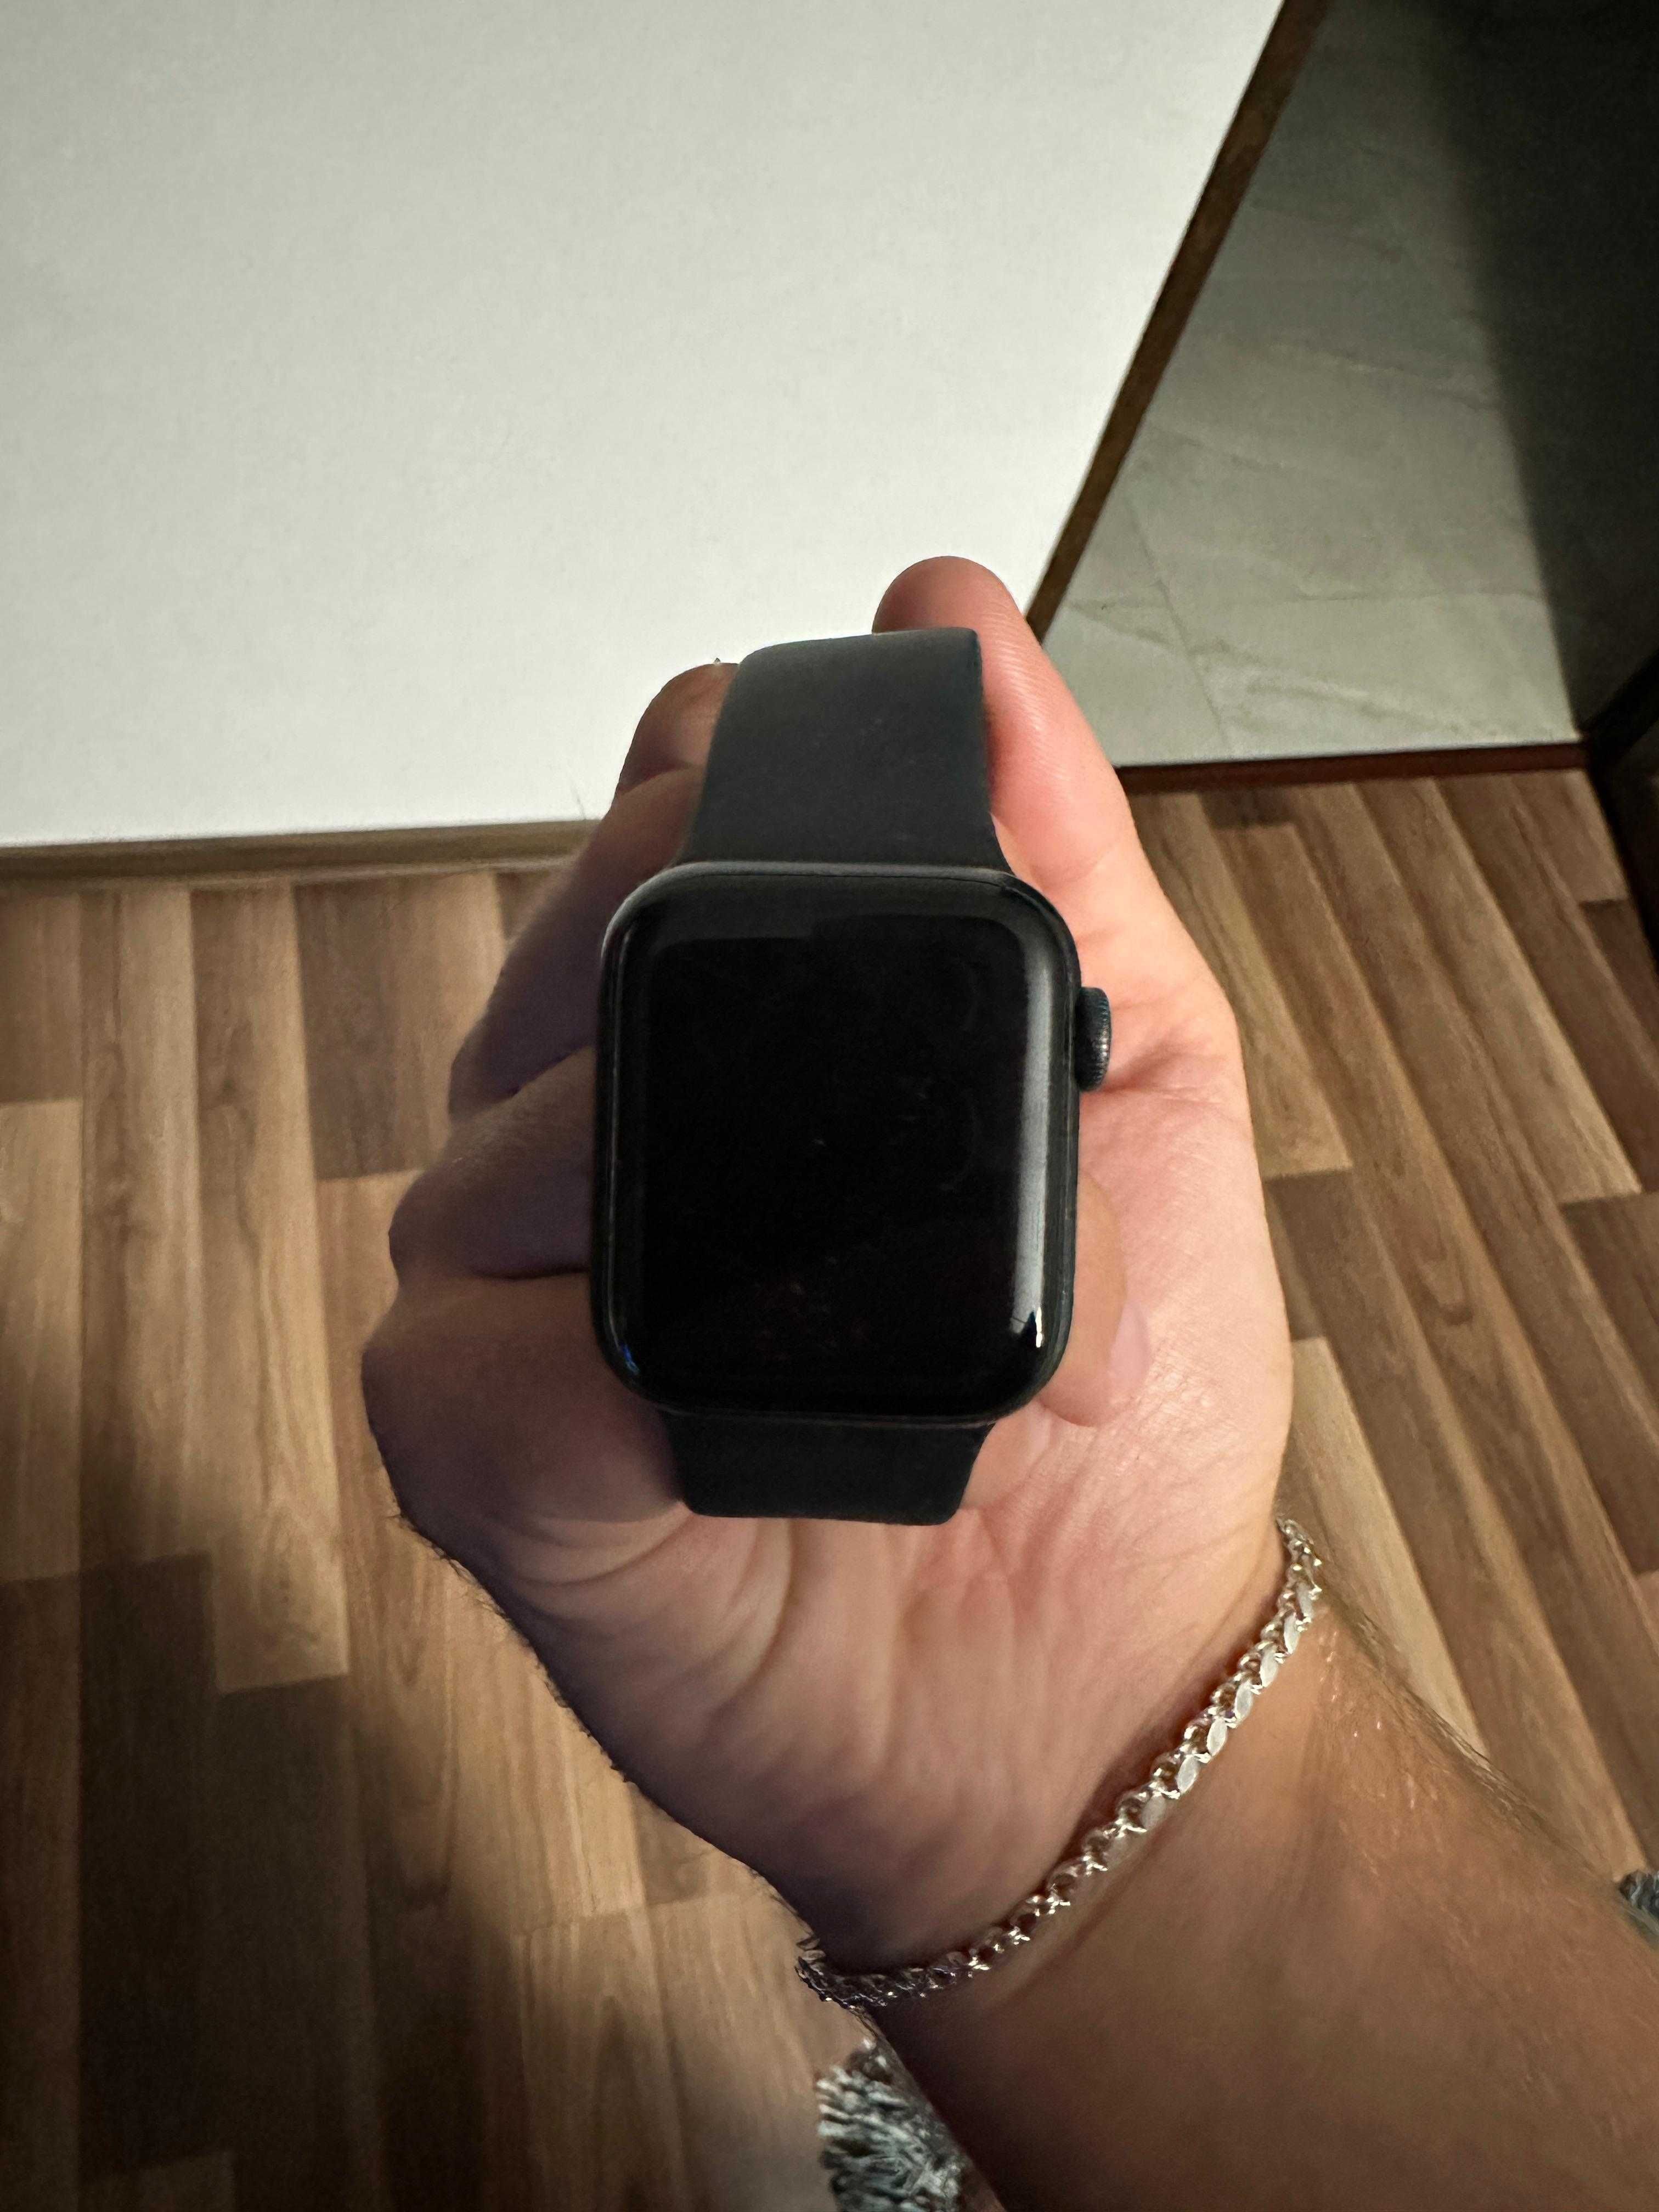 Apple Watch 6 Nefuncti0nal